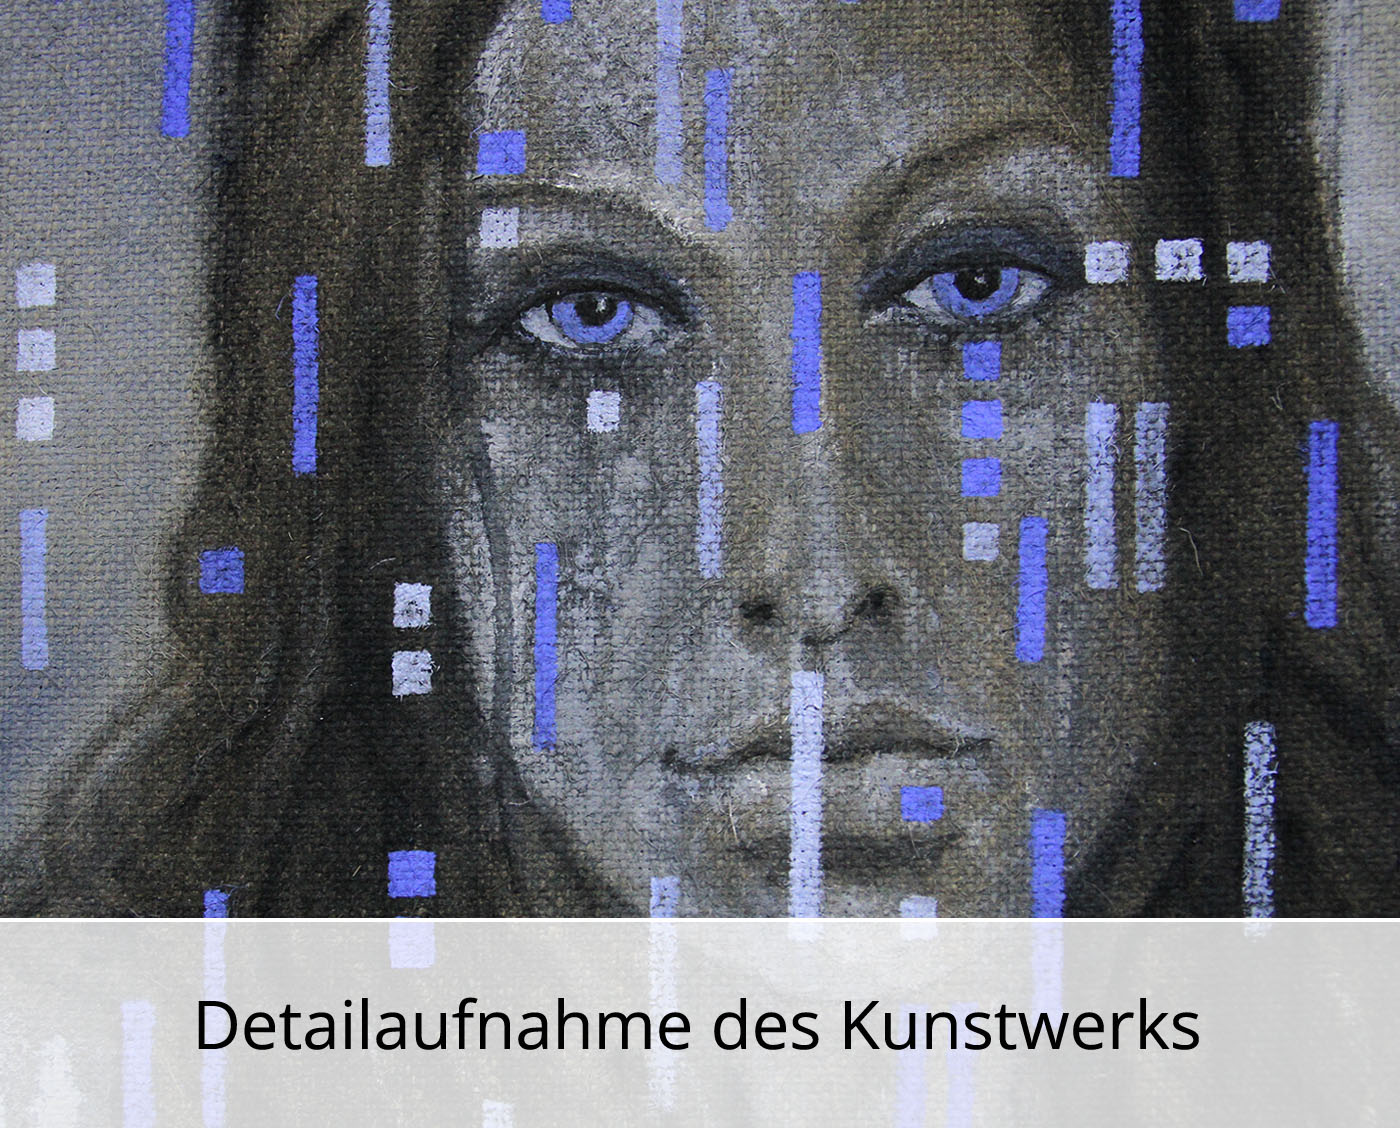 C. Blechschmidt: "Binäres Porträt", Original/Unikat, zeitgenössisches Ölgemälde